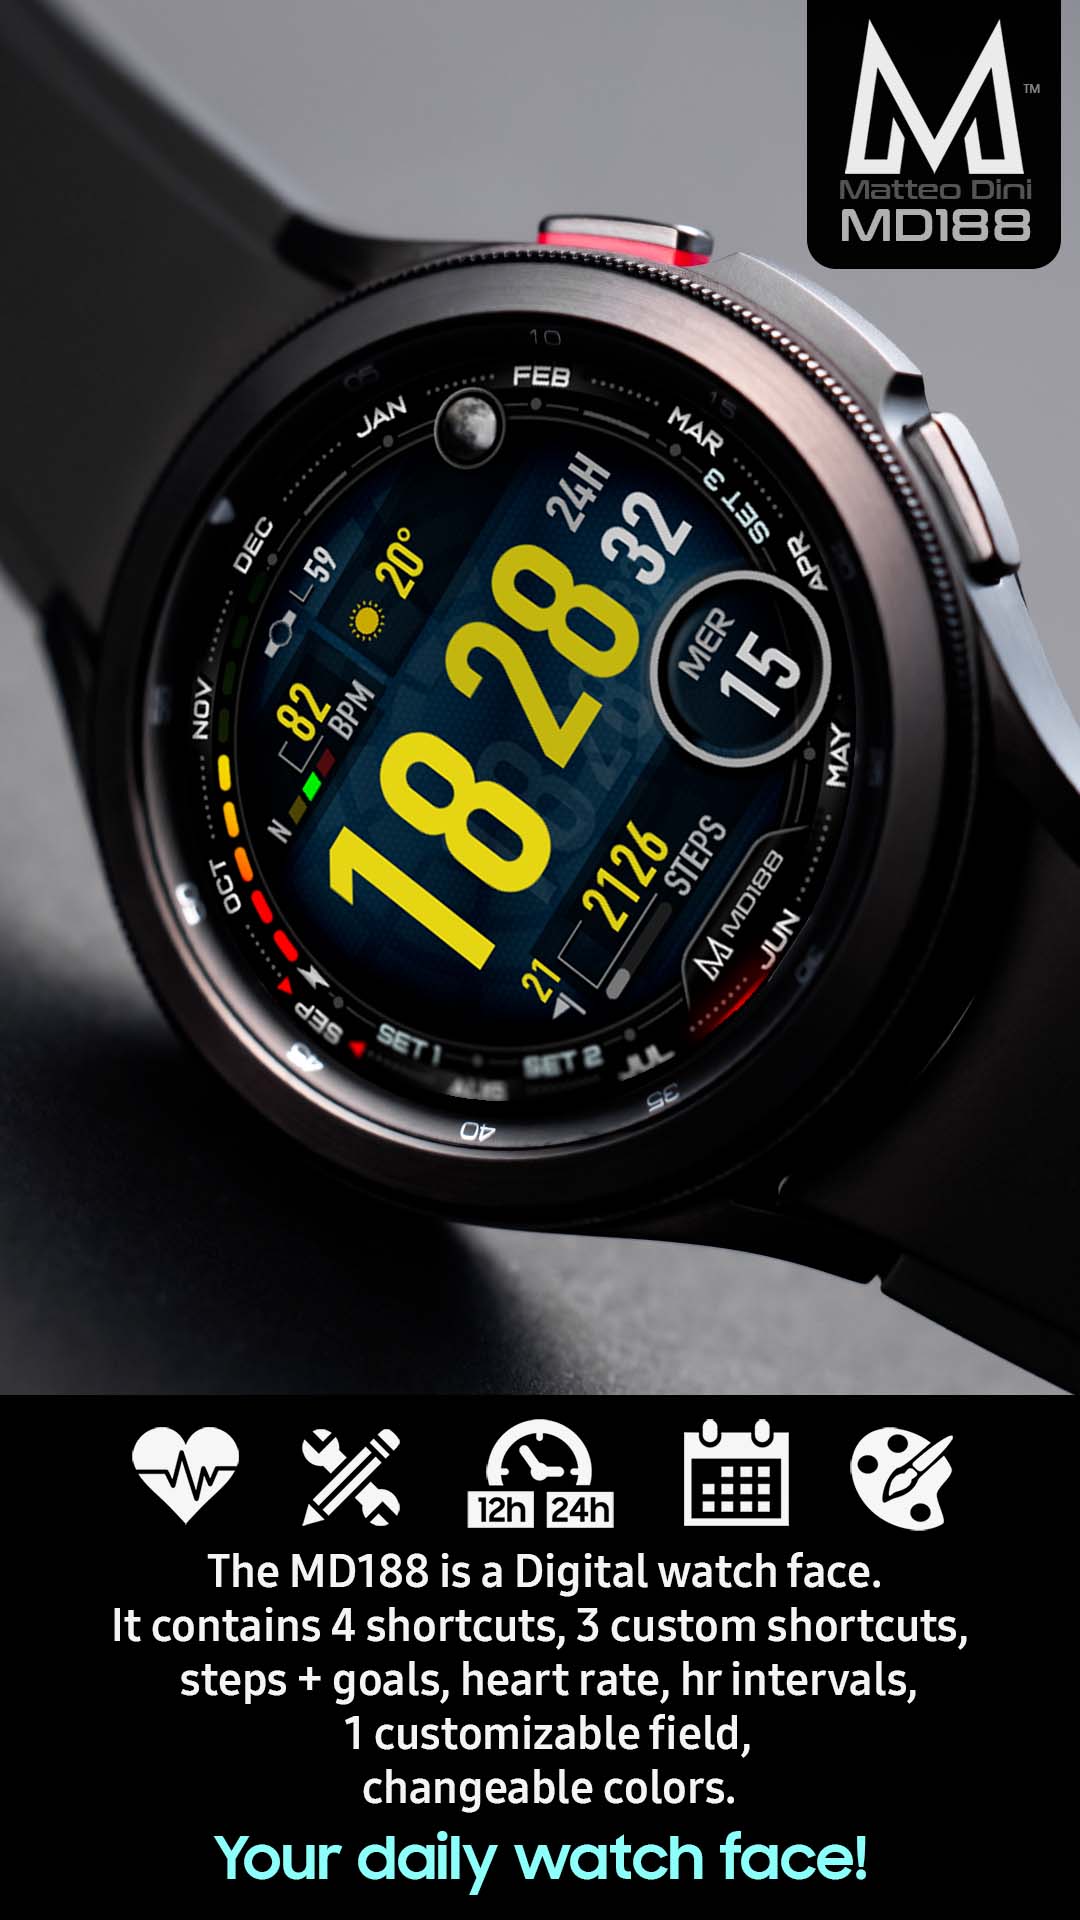 MD188 - Premium Digital Watch Face - Matteo Dini MD Wear OS Tizen